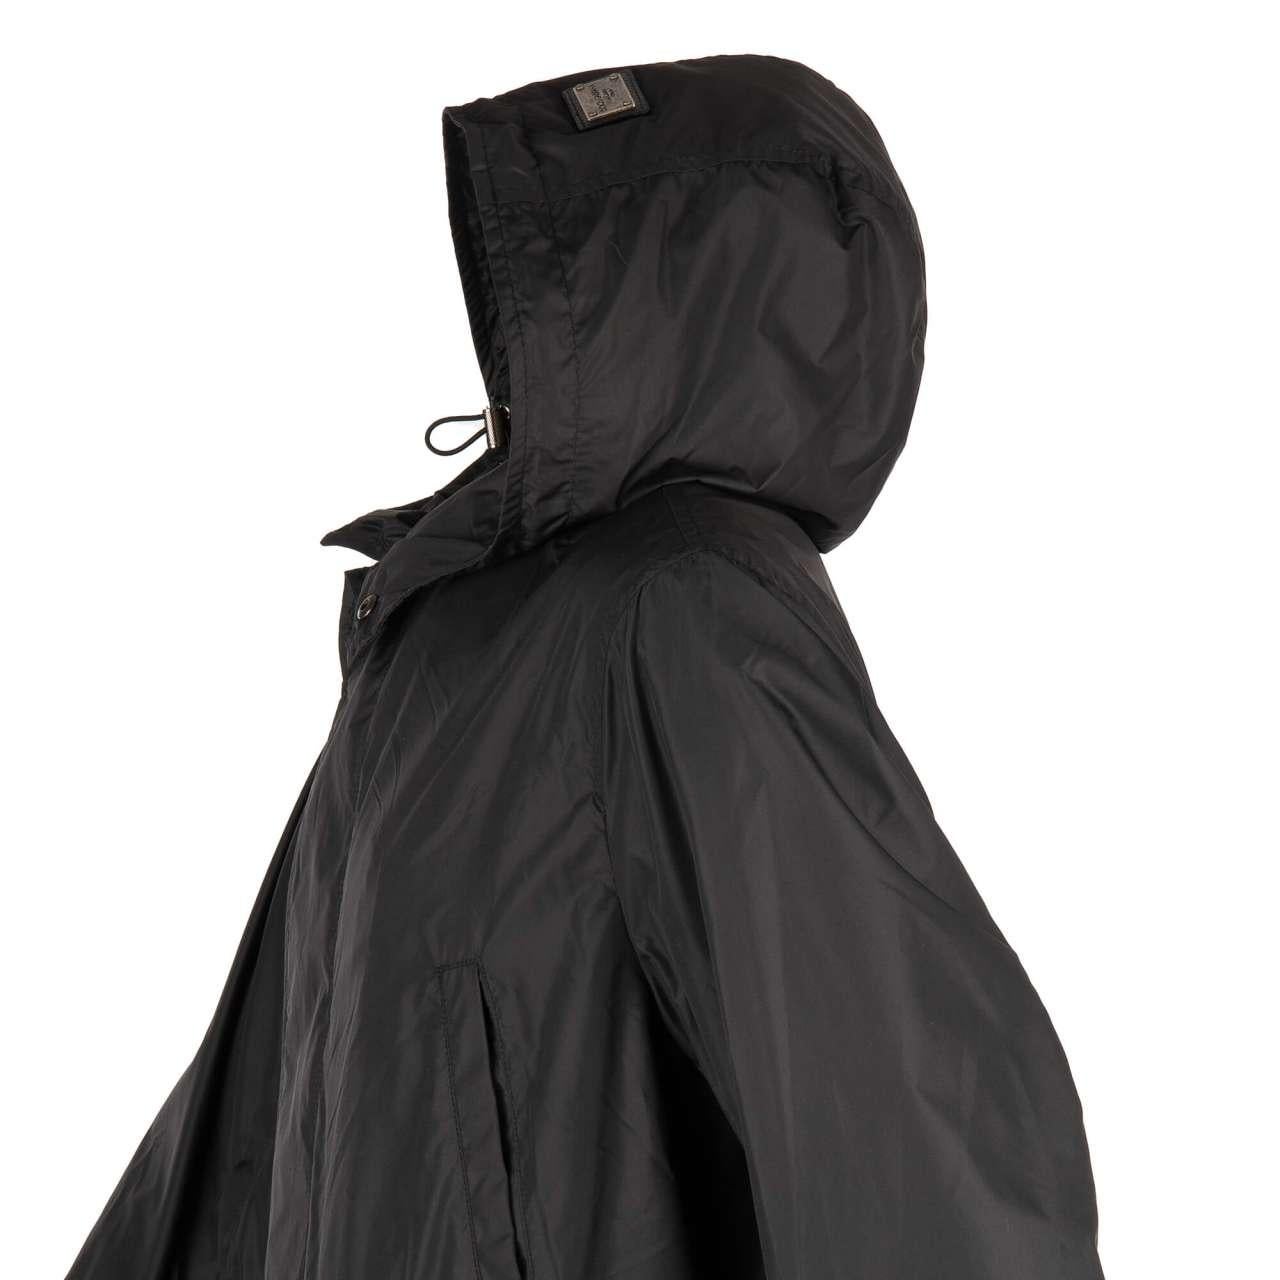 Dolce & Gabbana Light Hooded Rain Parka Jacket with Pockets and Logo Black 48 For Sale 1